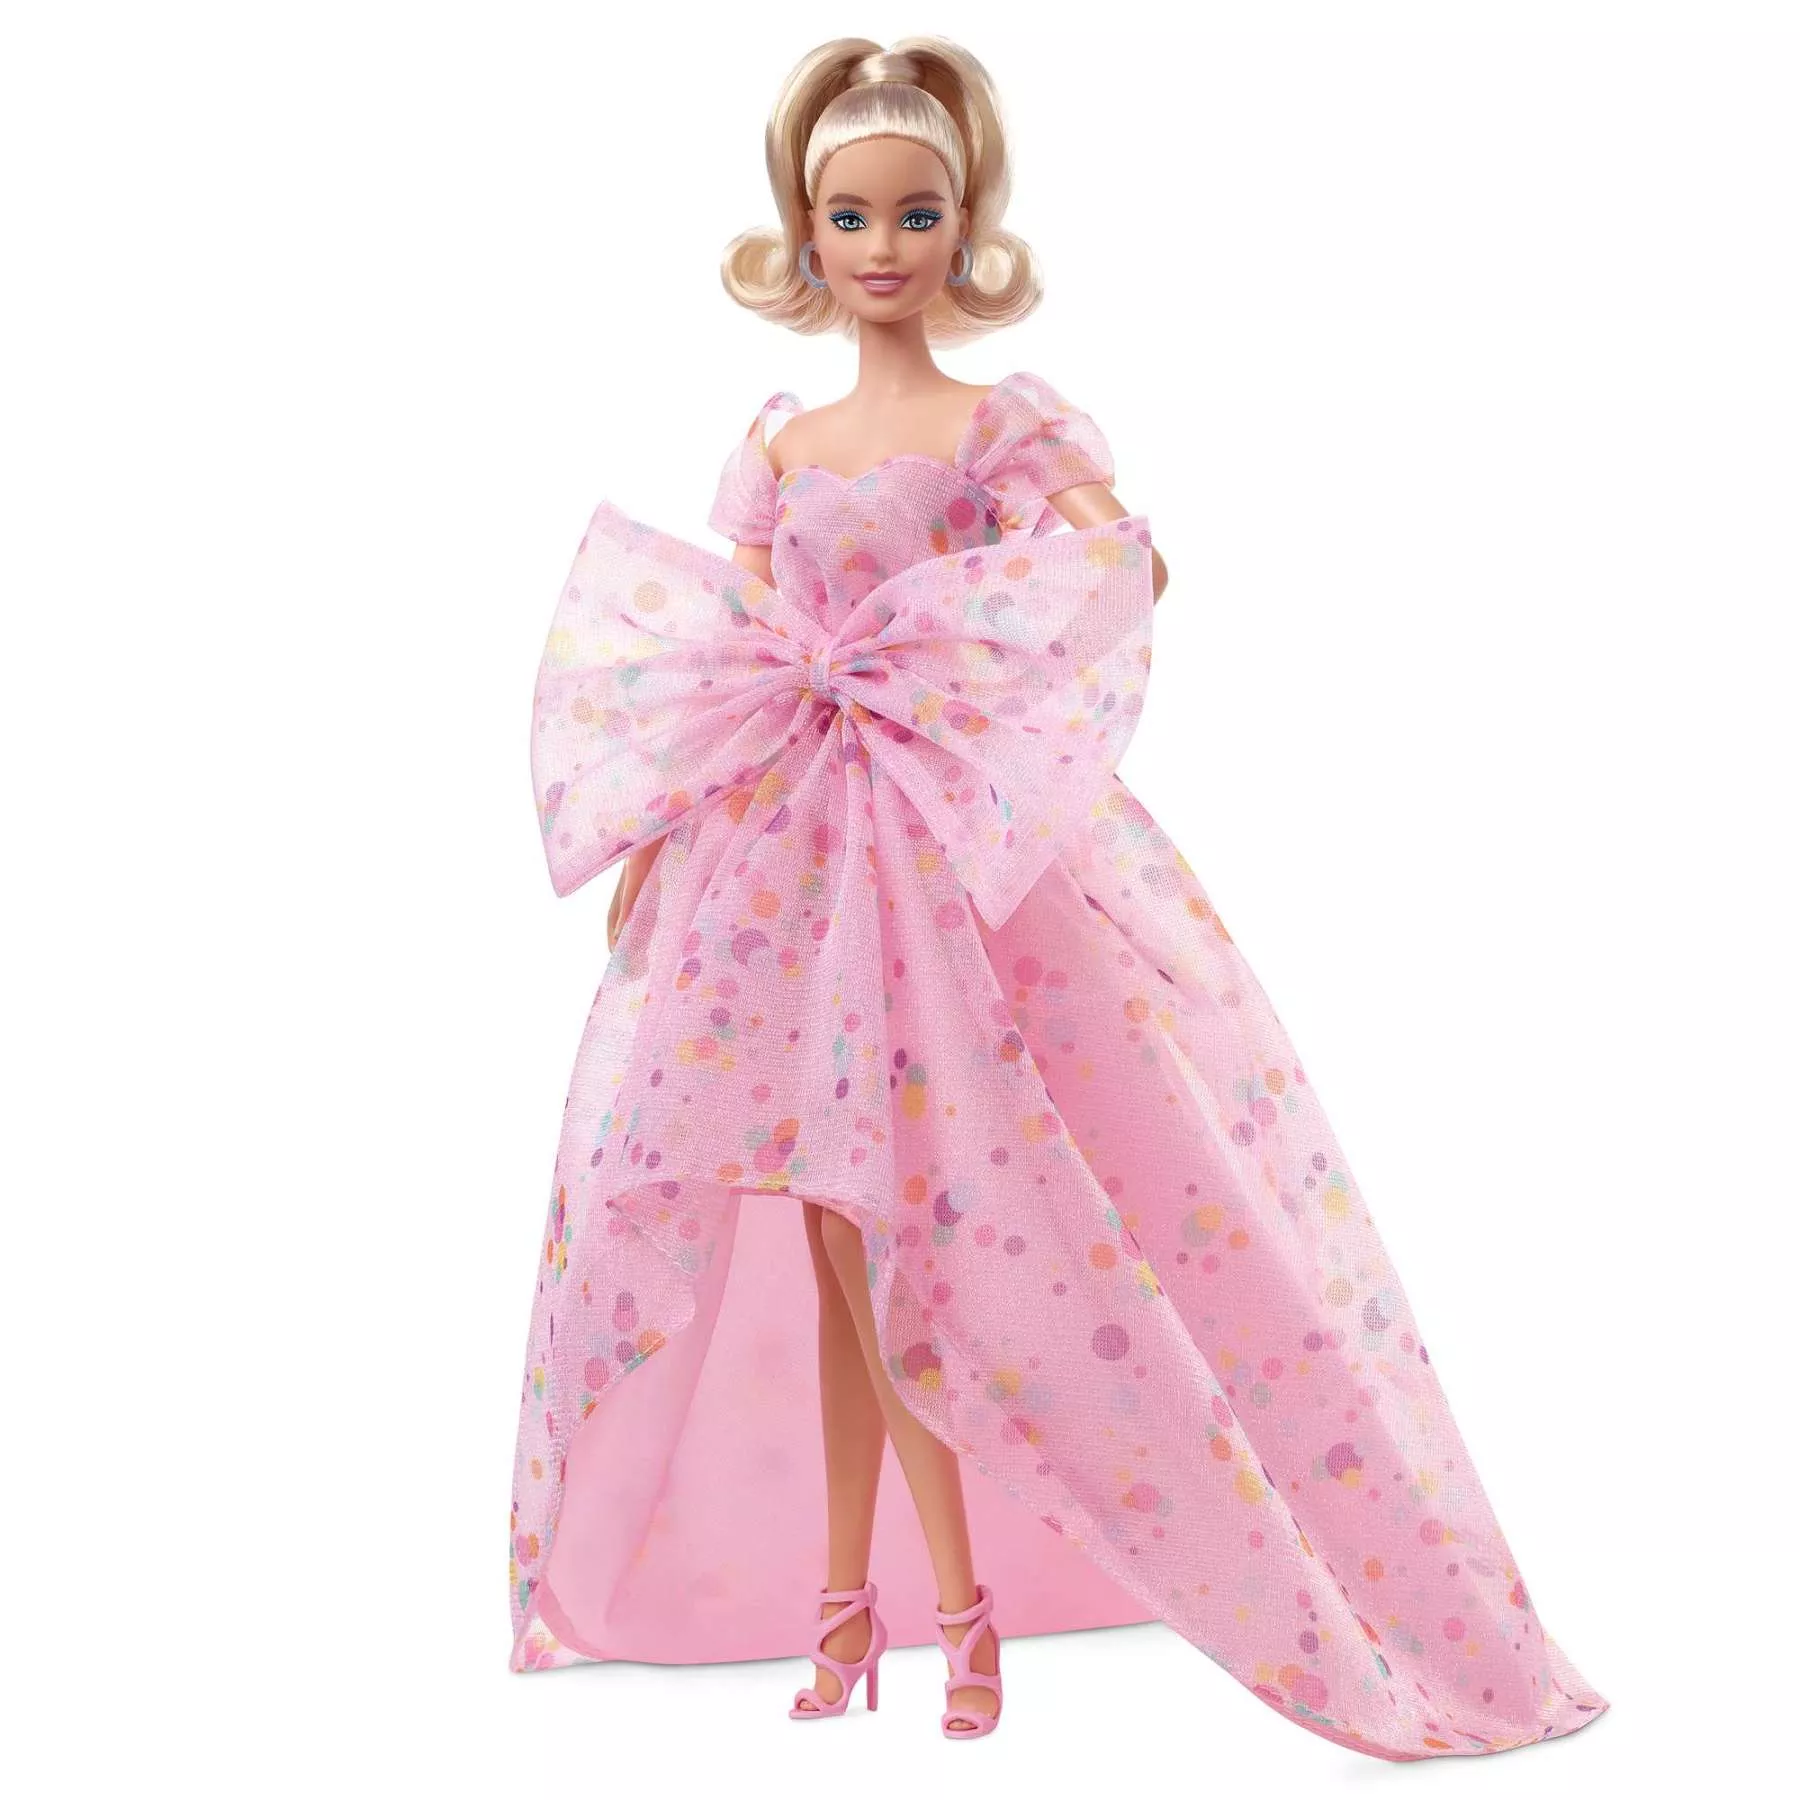 Barbie Birthday Wishes Doll HCB89